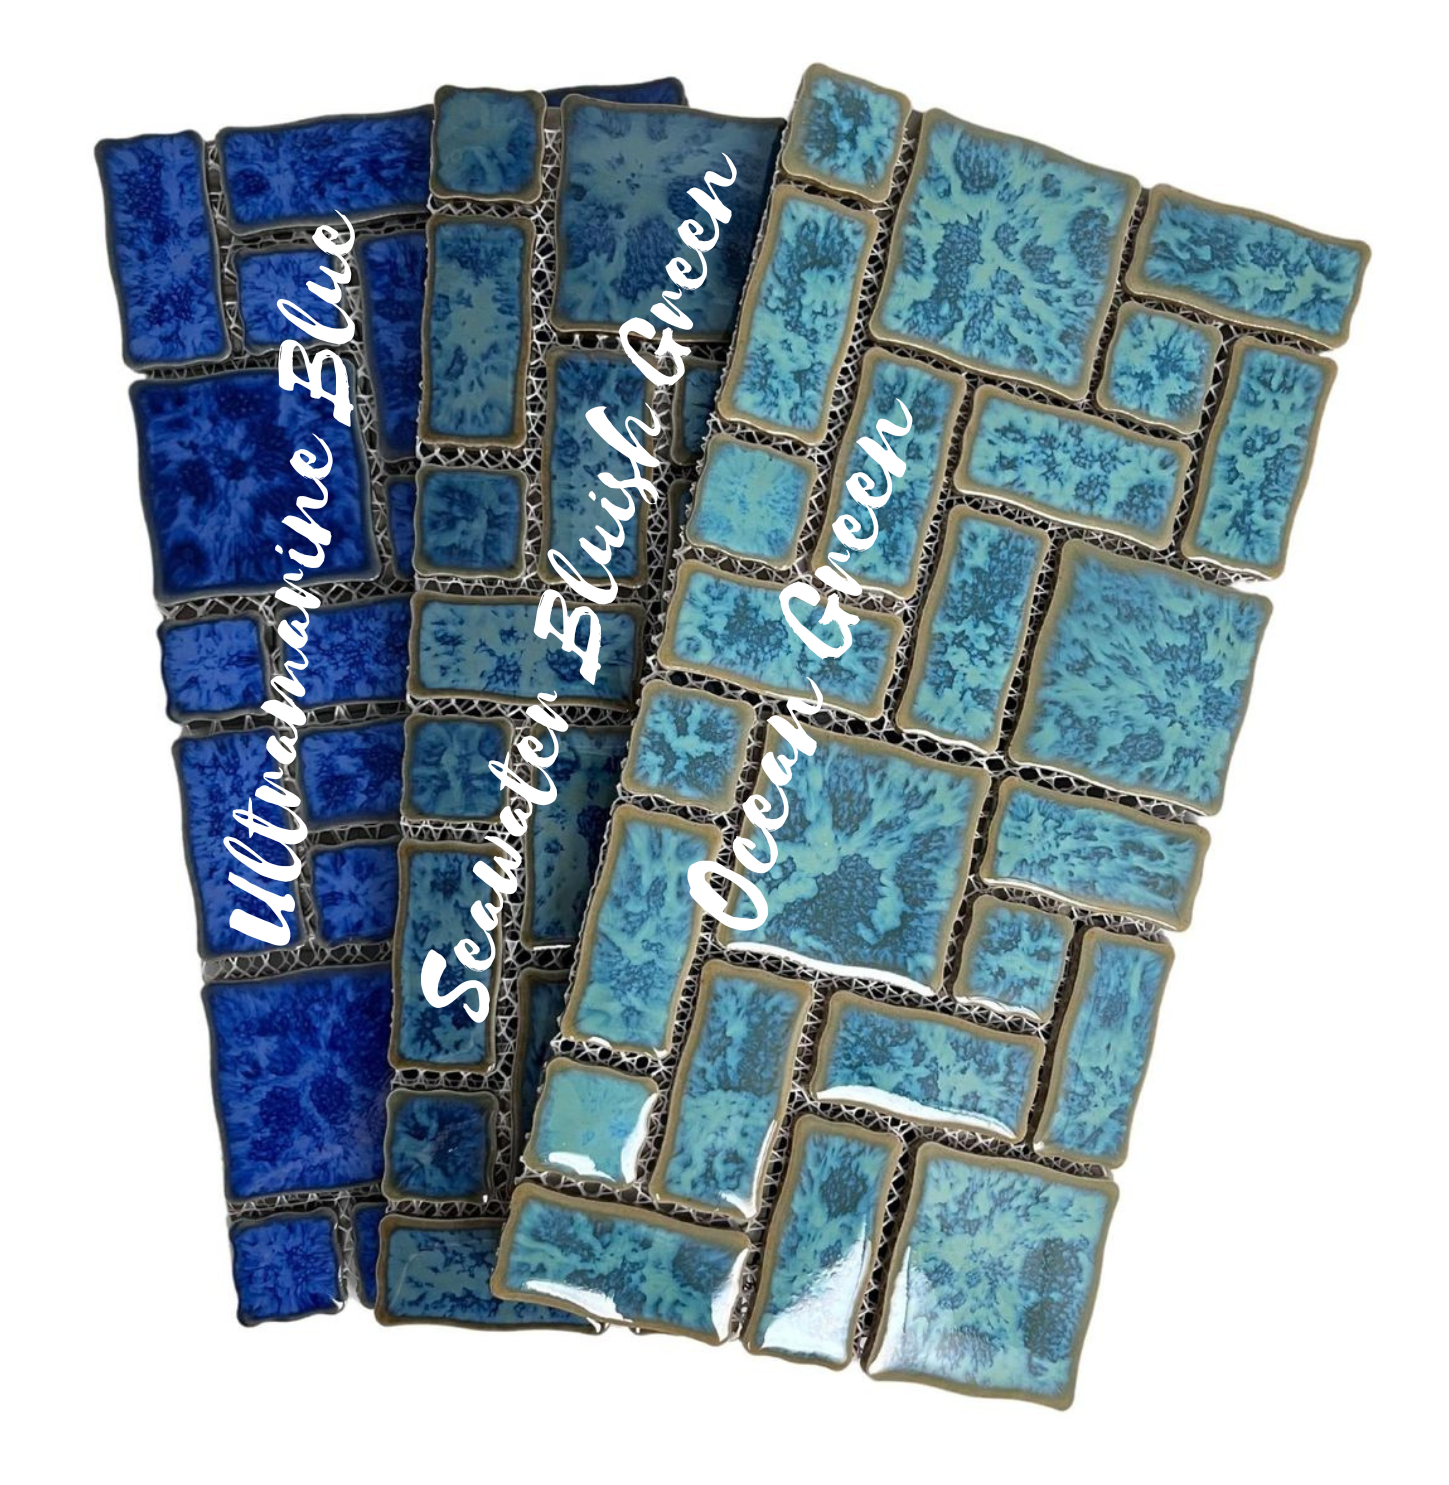 T‎PACFD-RDM-PL Ultramarine Blue Random Sized Wavy Edges Porcelain Glazed Pool Mosaic Floor and Wall Tile for Backsplash, Kitchen, Bathroom, Swimming Pool